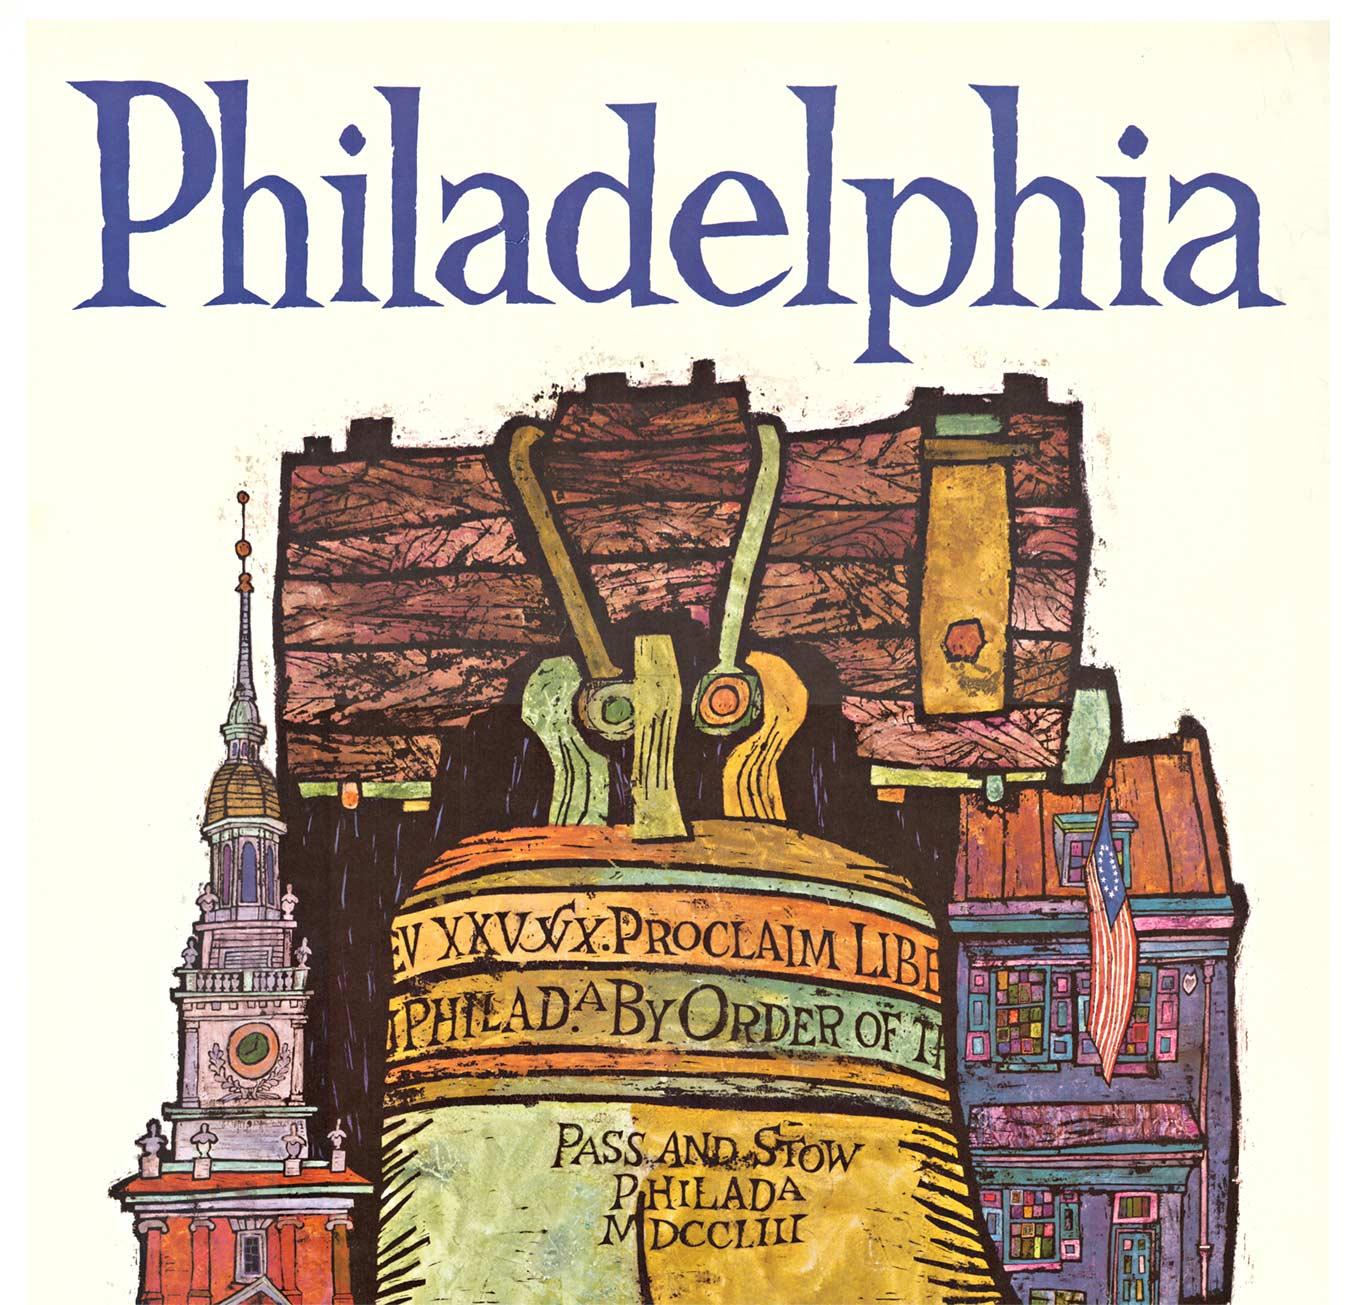 Original Philadelphia Fly TWA Superjets vintage travel poster - Print by David Klein